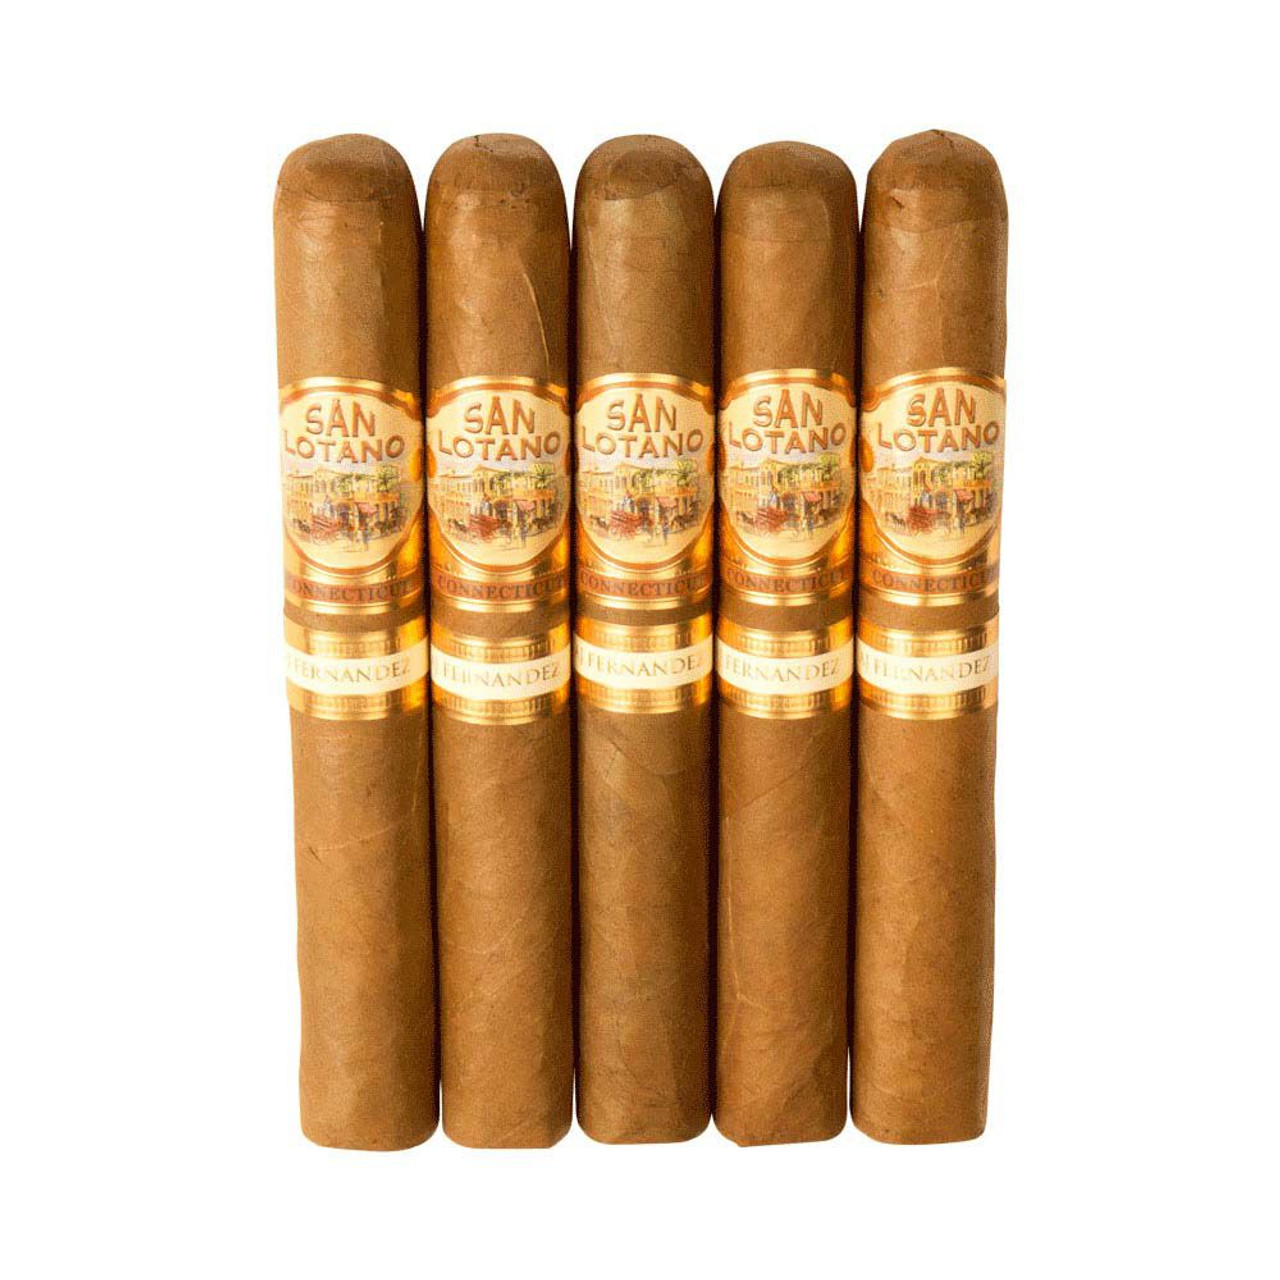 AJ Fernandez San Lotano Requiem Connecticut Toro Cigars - 6 x 52 (Pack of 5) *Box